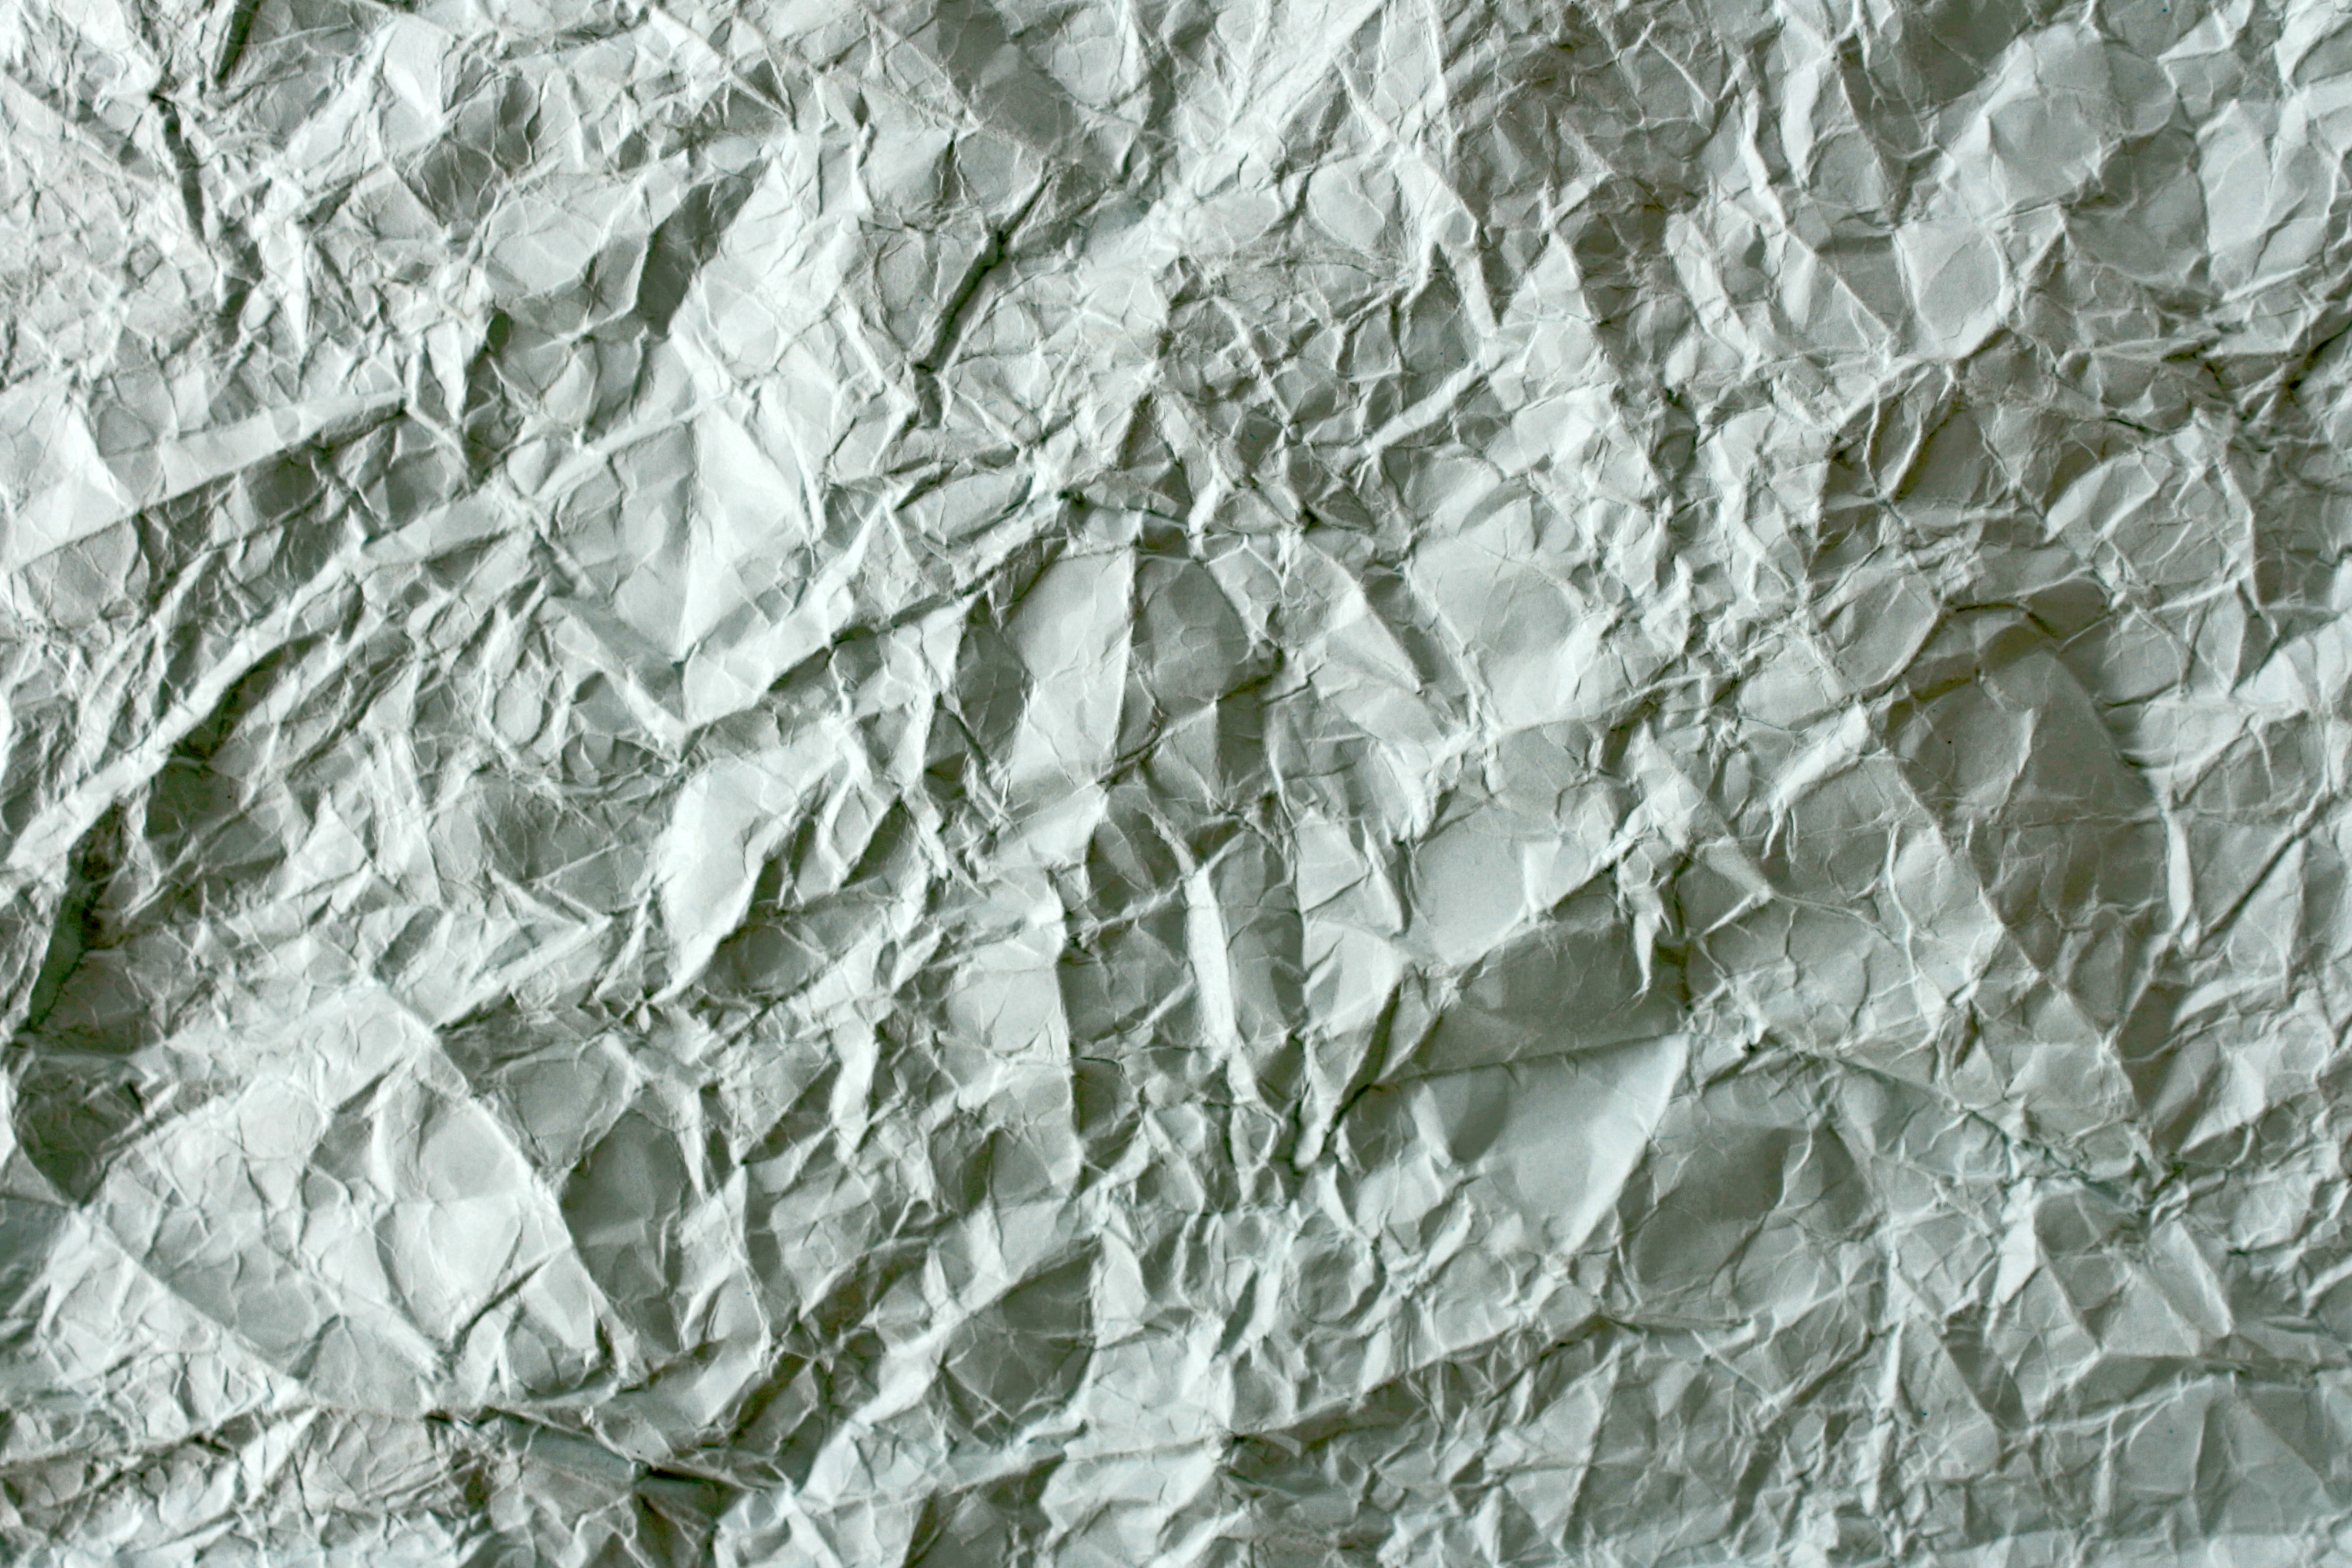 Crumpled Paper Texture image Free stock photo Public Domain photo CC0 Images